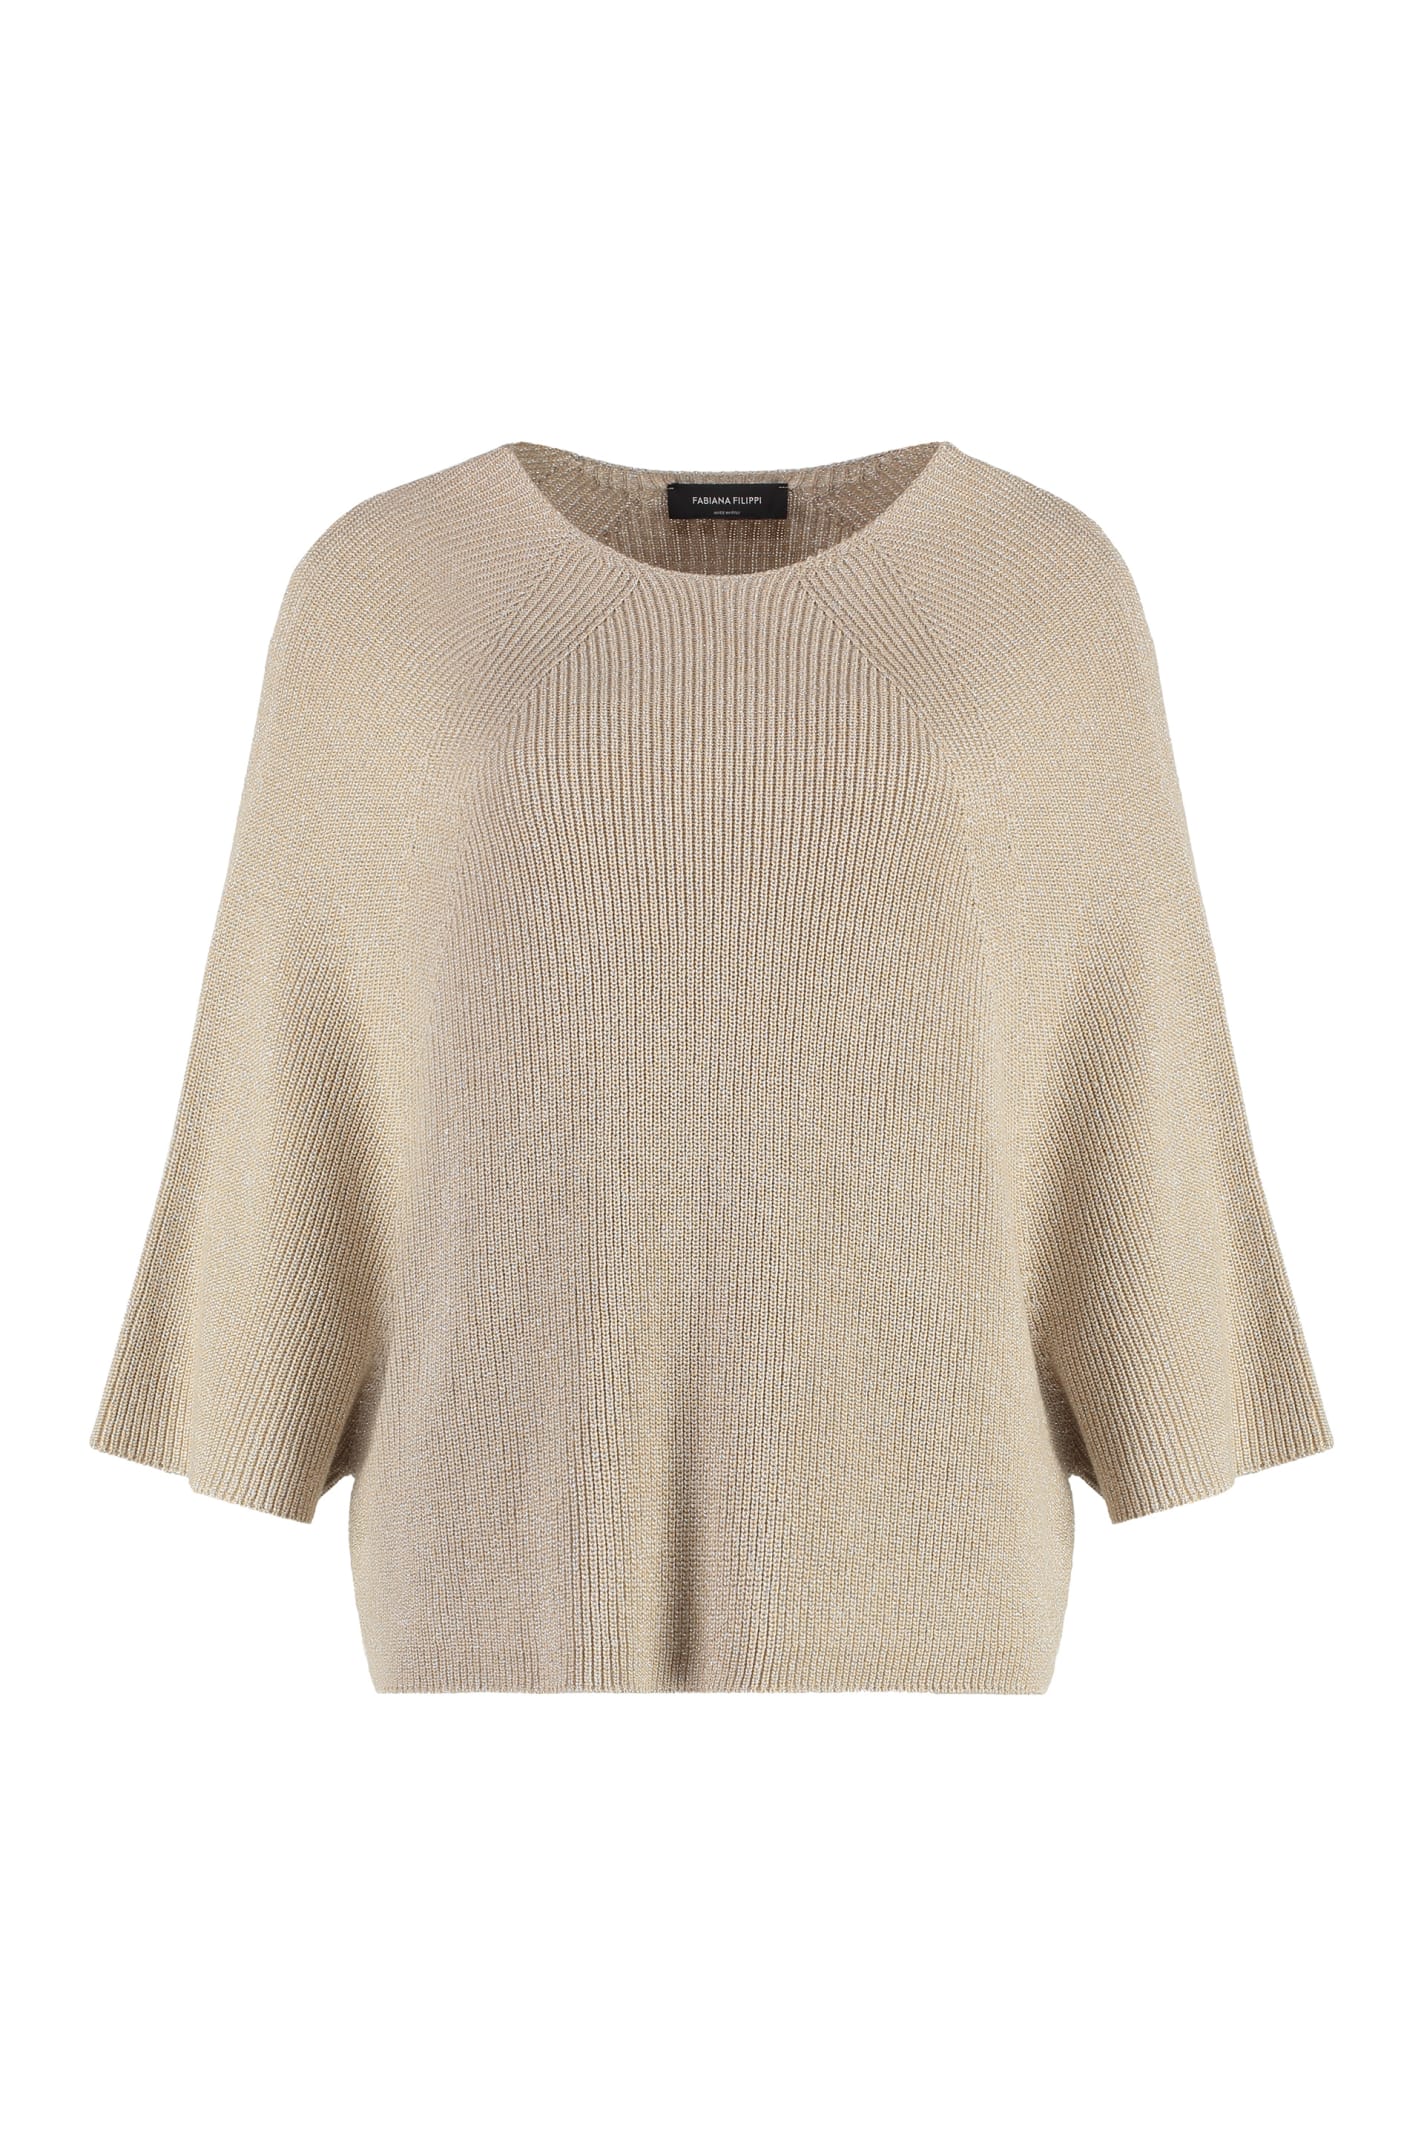 Cotton Blend Crew-neck Sweater